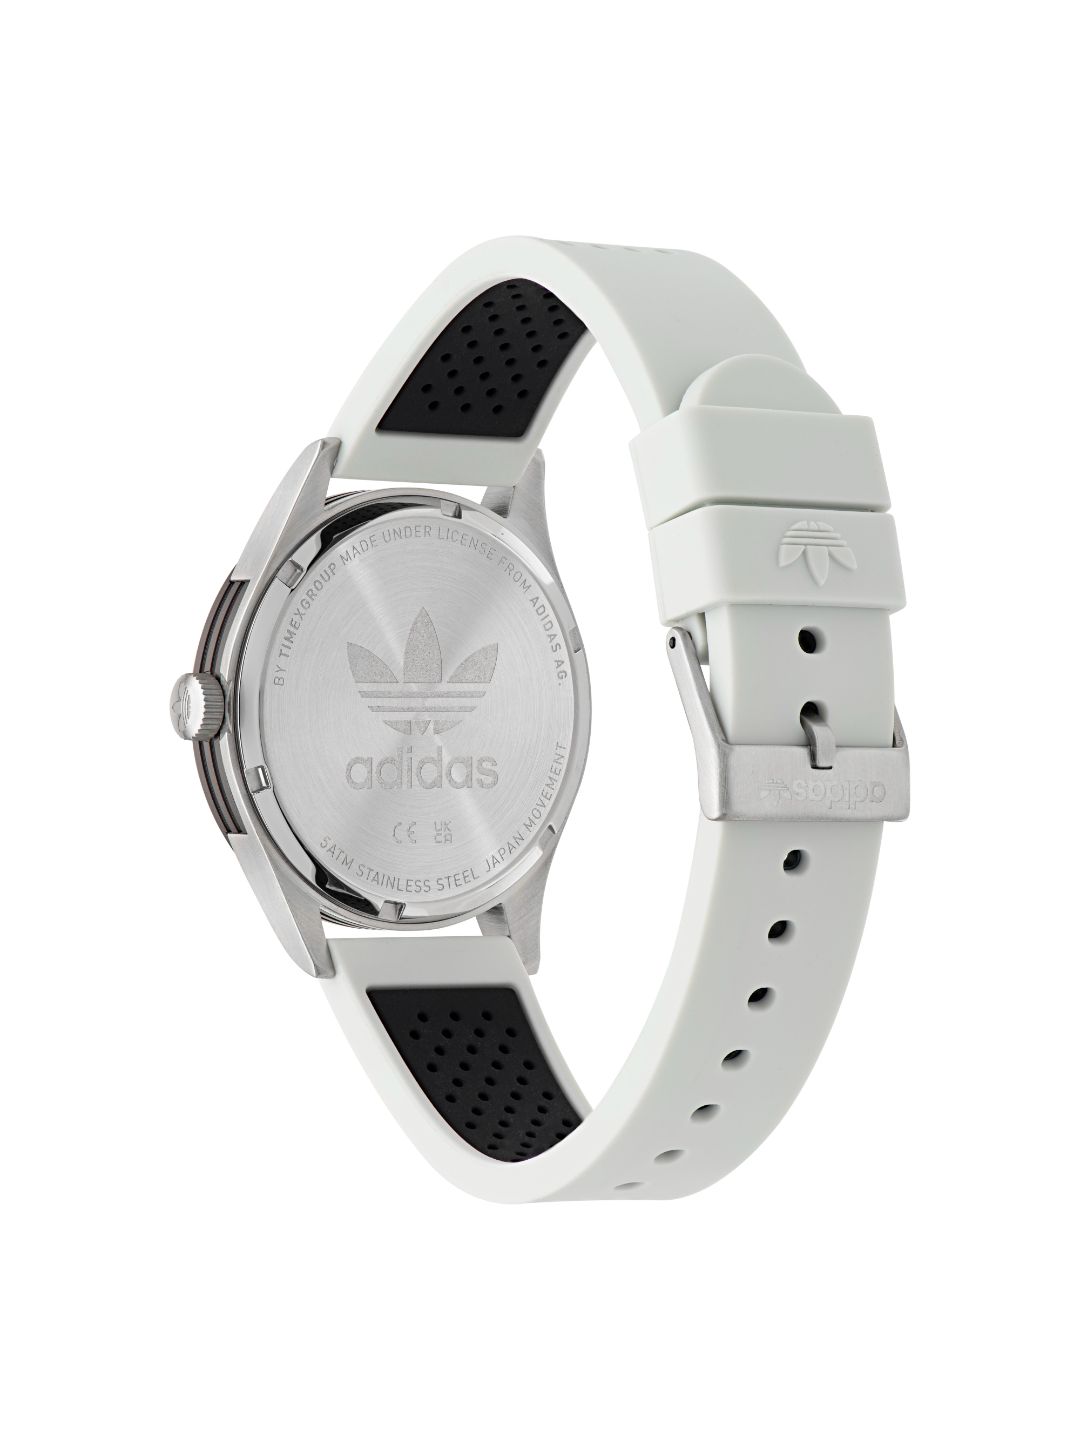 Adidas Originals White Dial Unisex Watch - AOSY23033